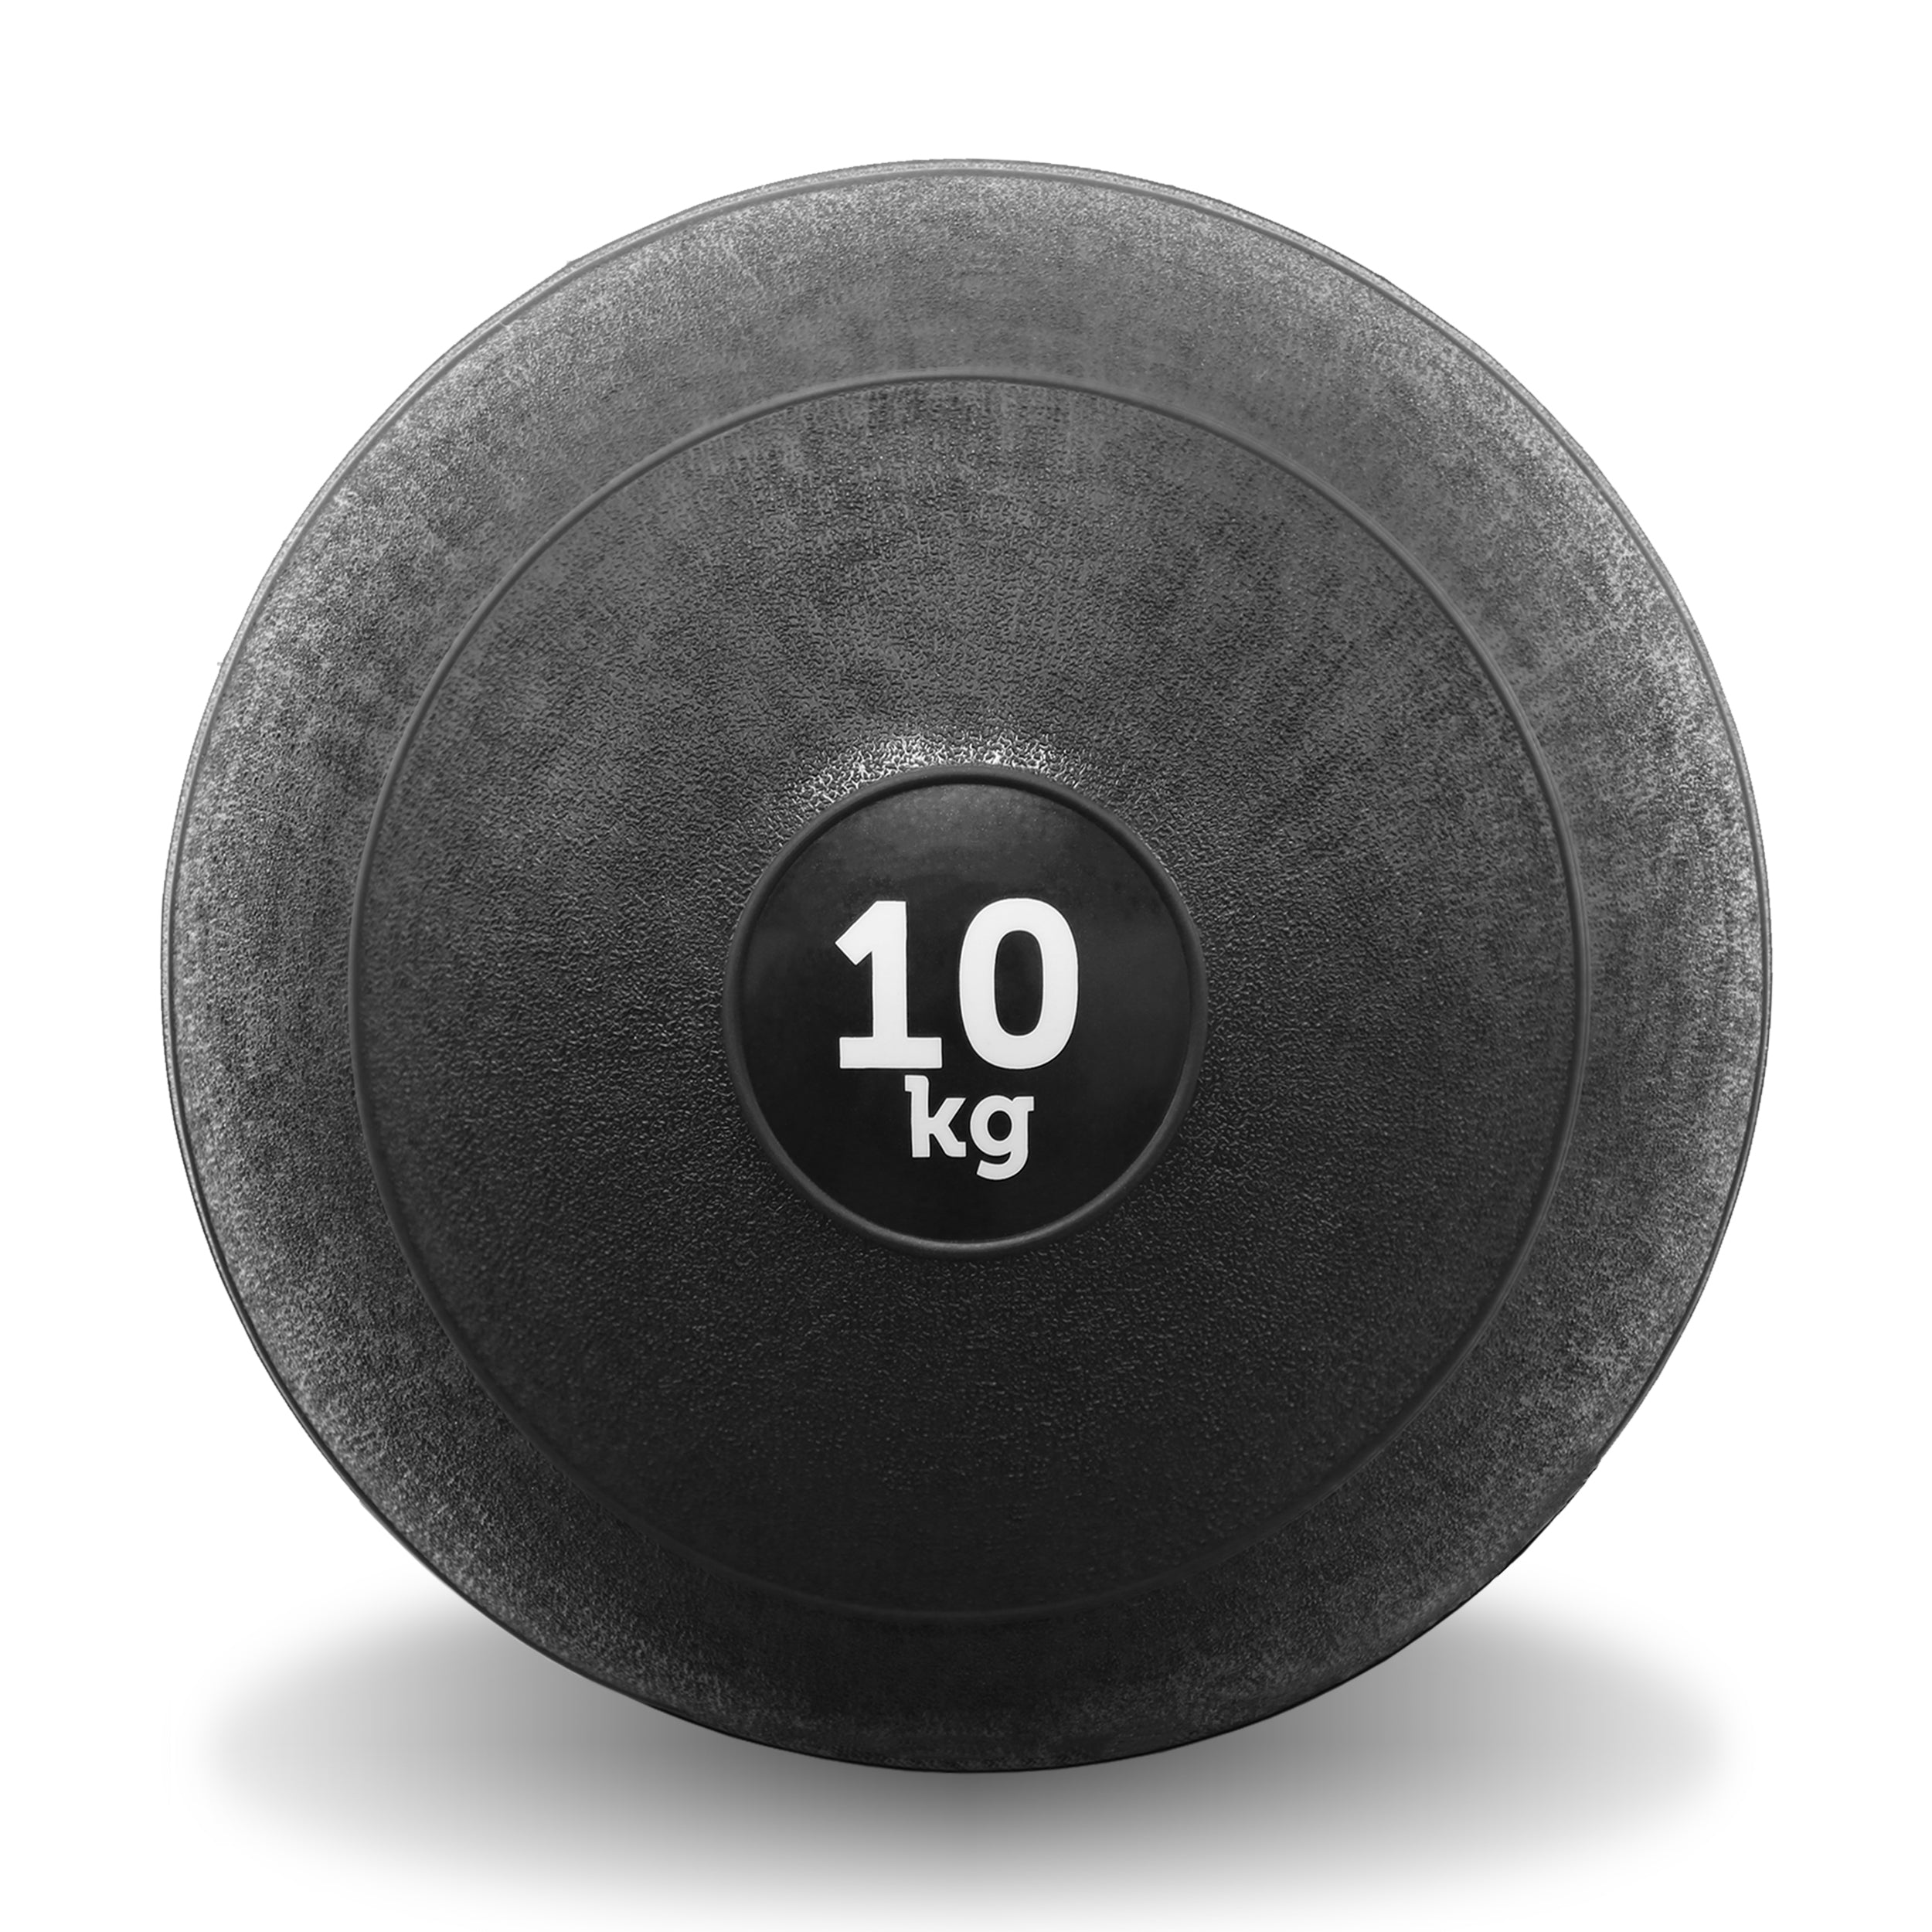 Heavy Duty Slam Ball - Available in 5kg, 10kg, 12kg & 15kg